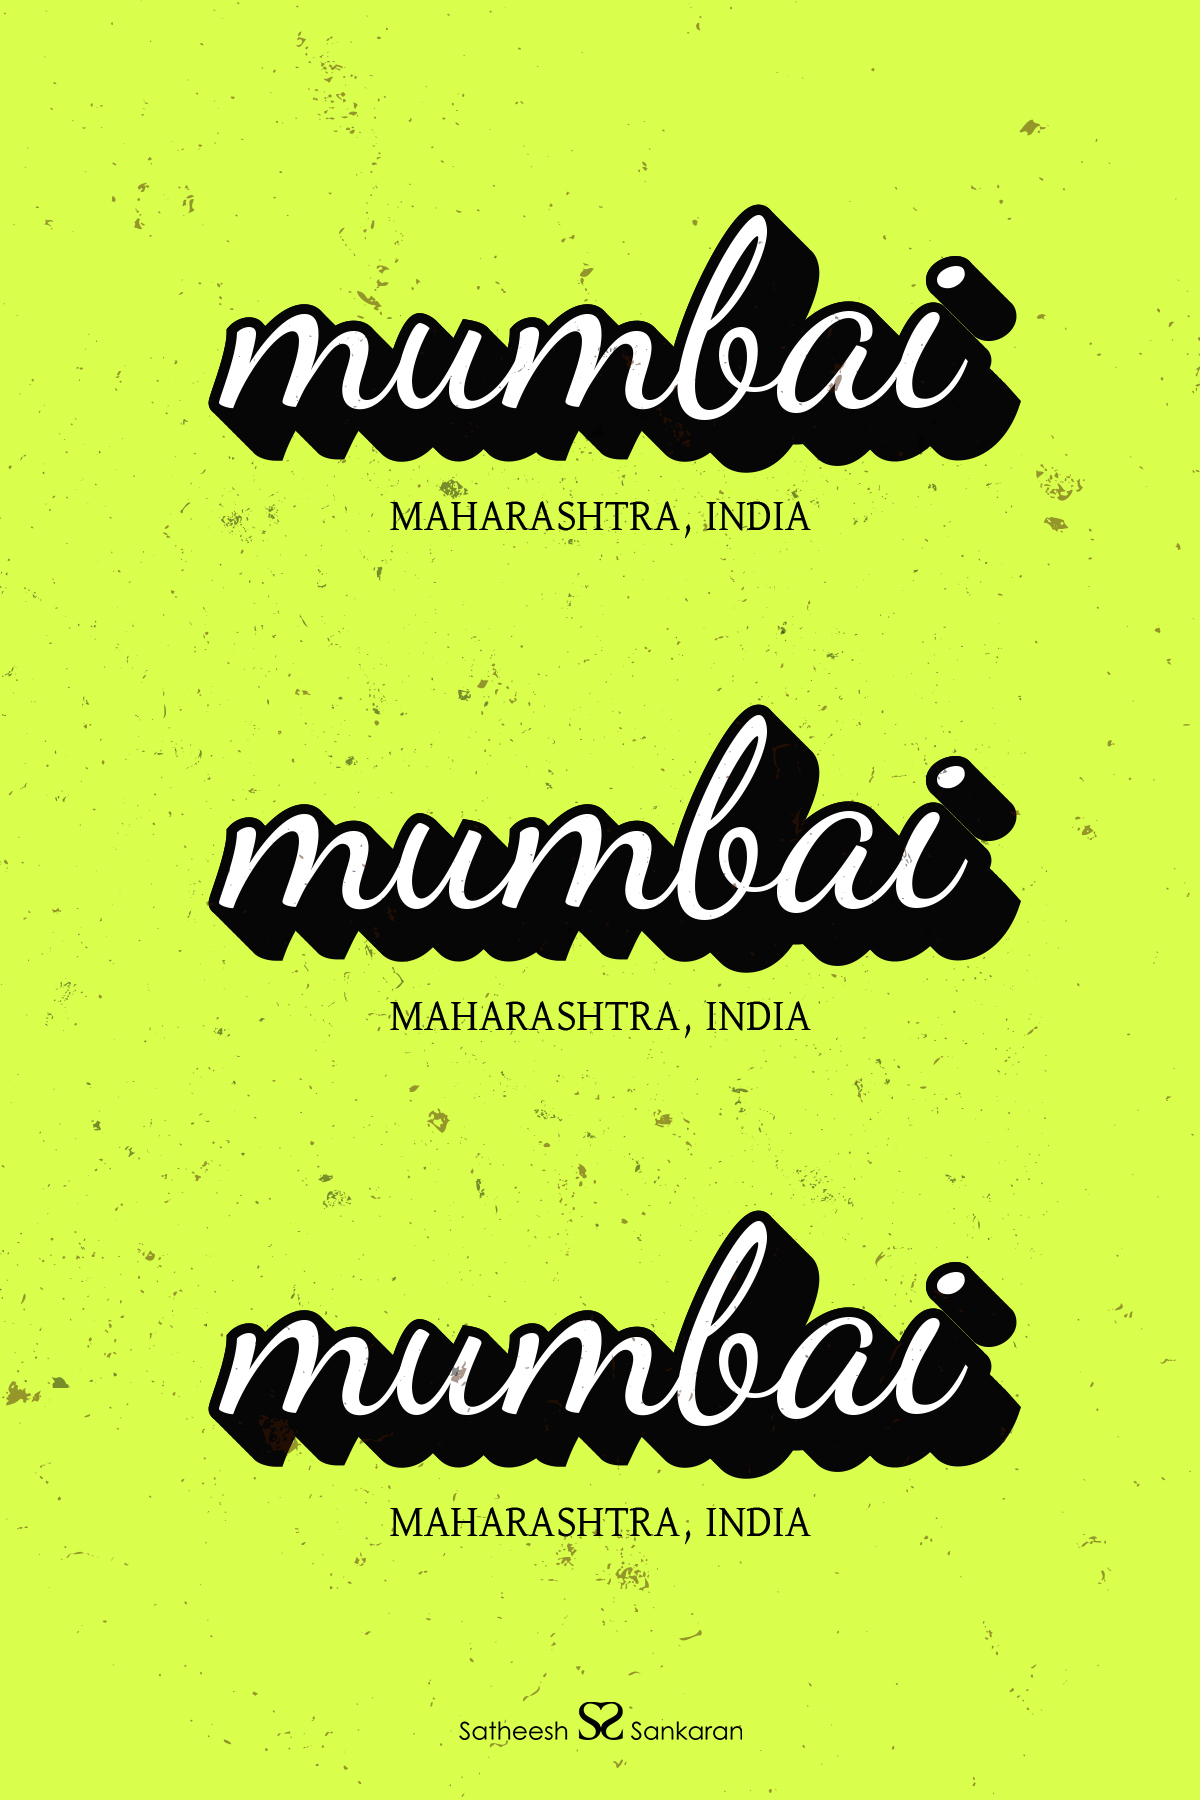 Mumbai, Maharashtra in India - Typography Poster Design